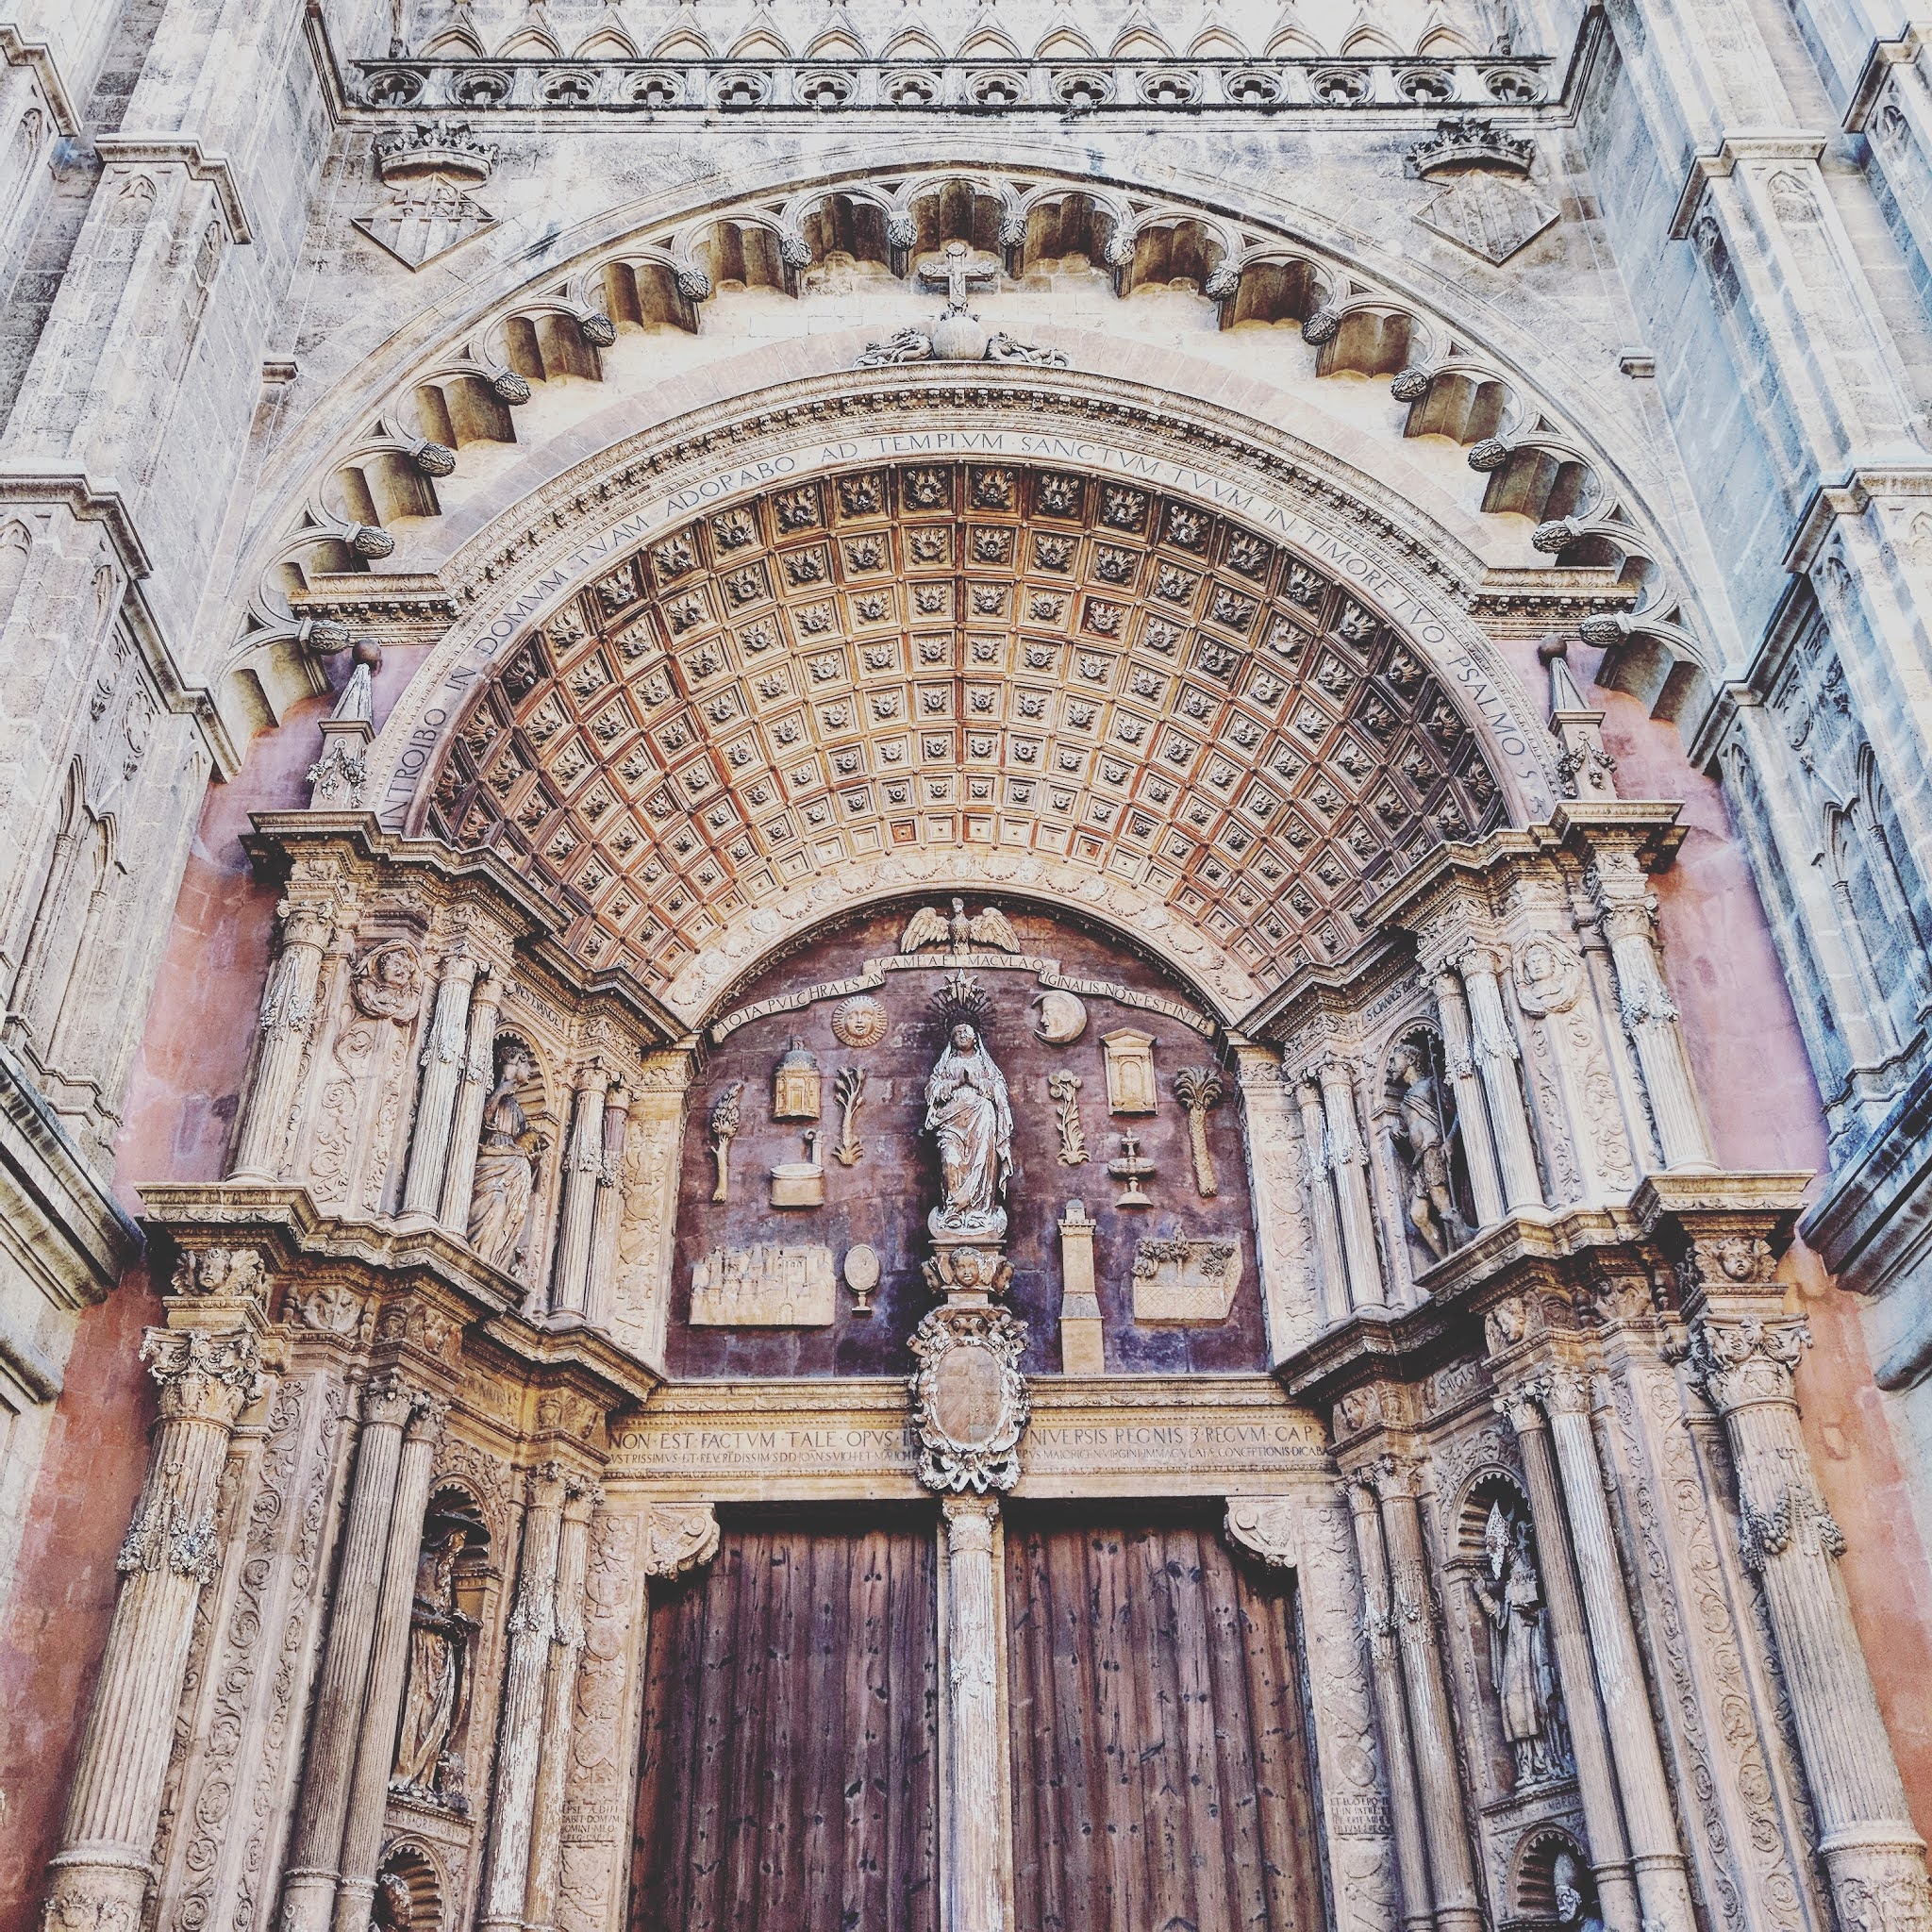 La Seu Cathedral detailed arches in Palma de Majorca